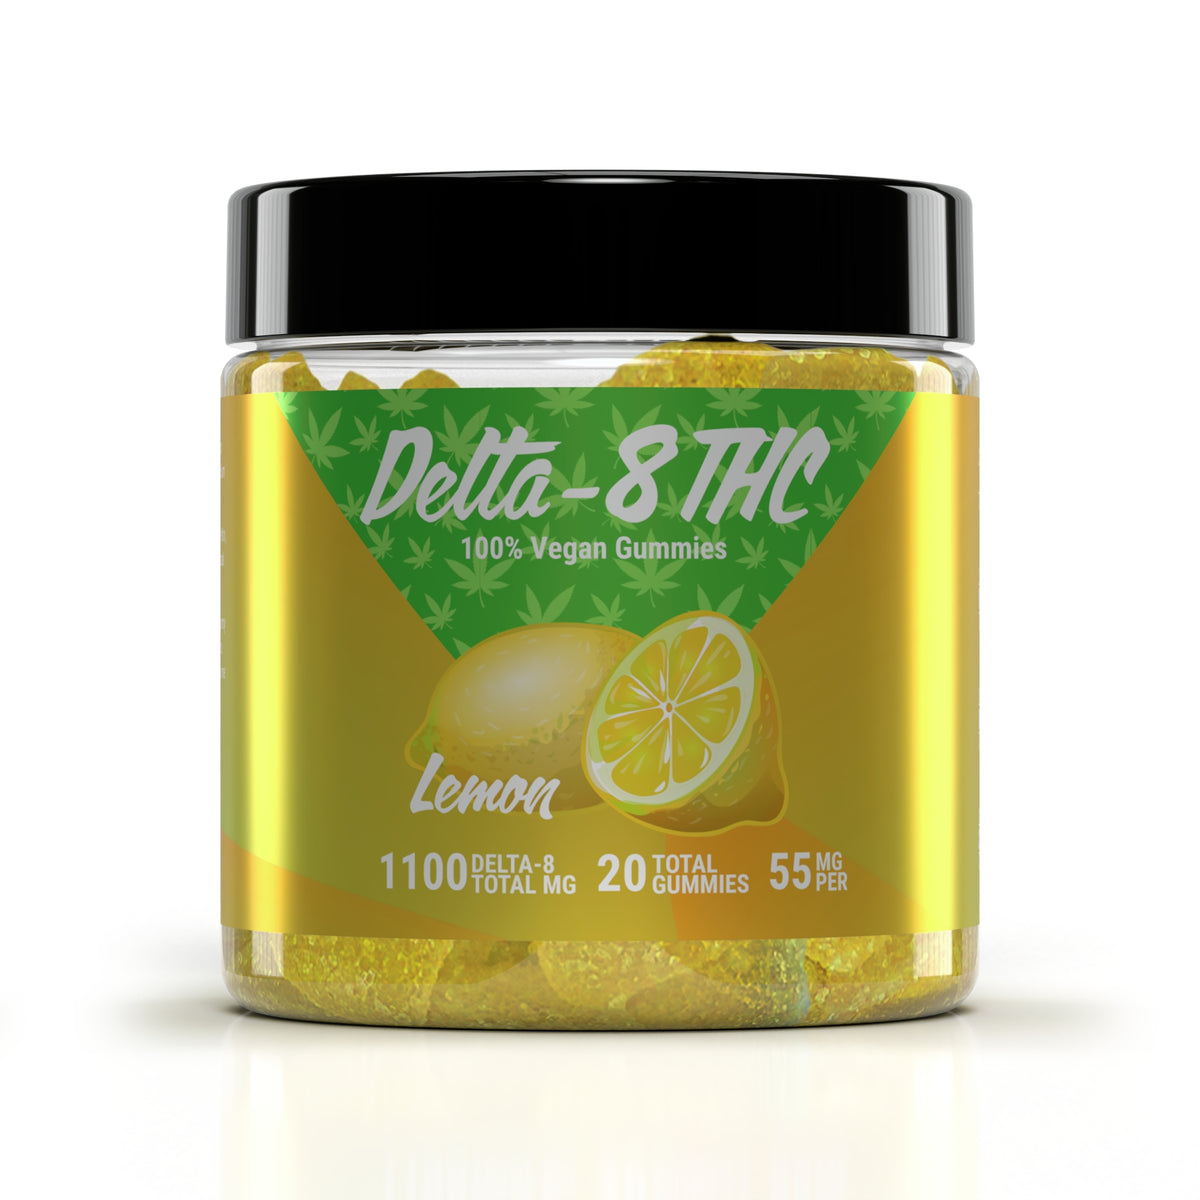 Delta-8 Vegan 55 mg Lemon Flavor